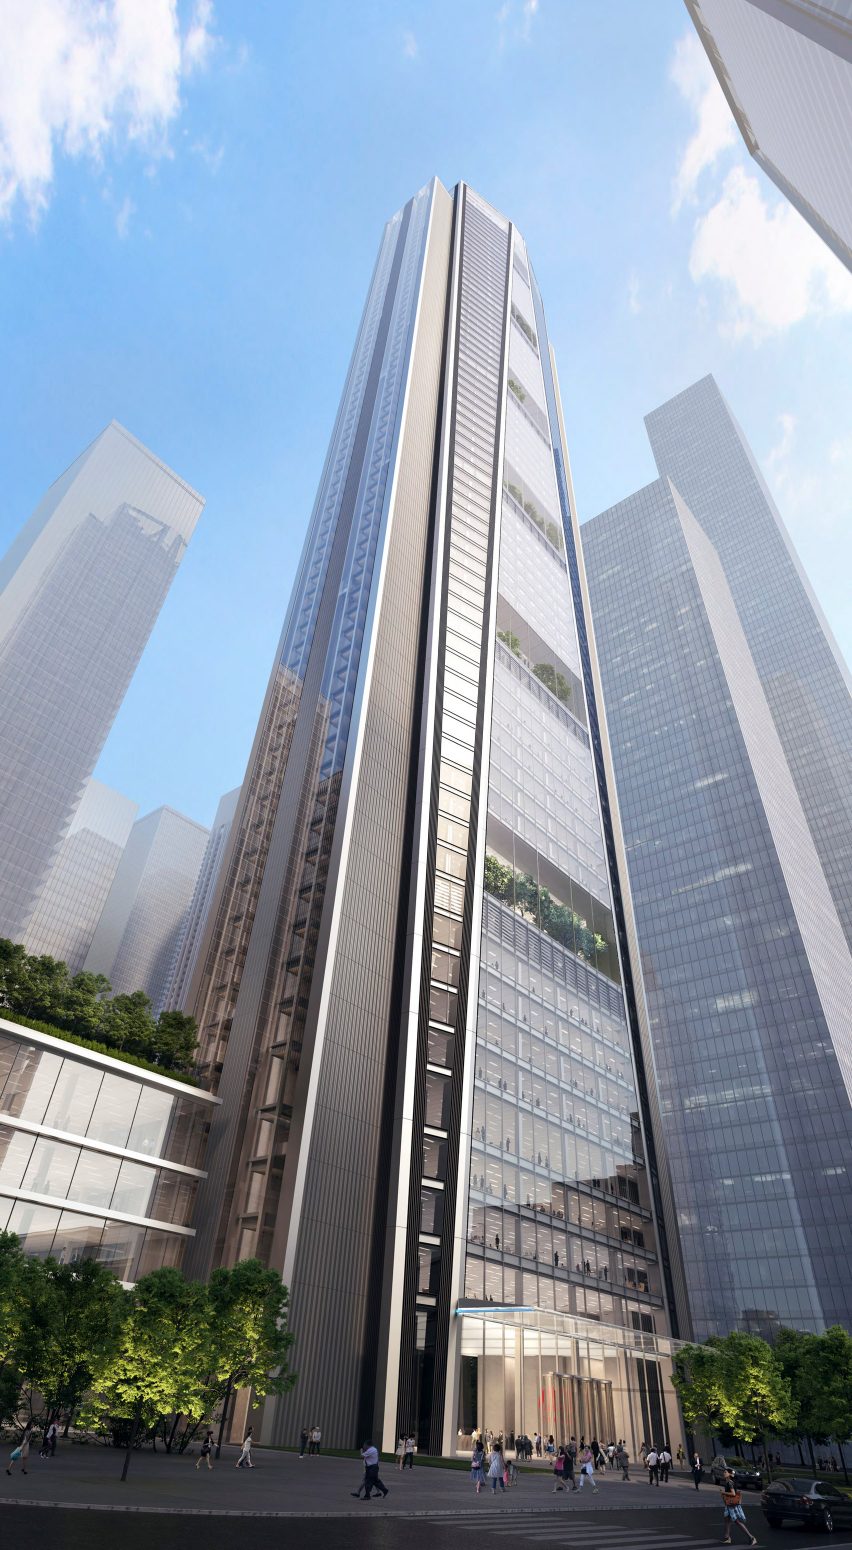 China Merchants Bank skyscraper by Foster + Partners in Shenzhen